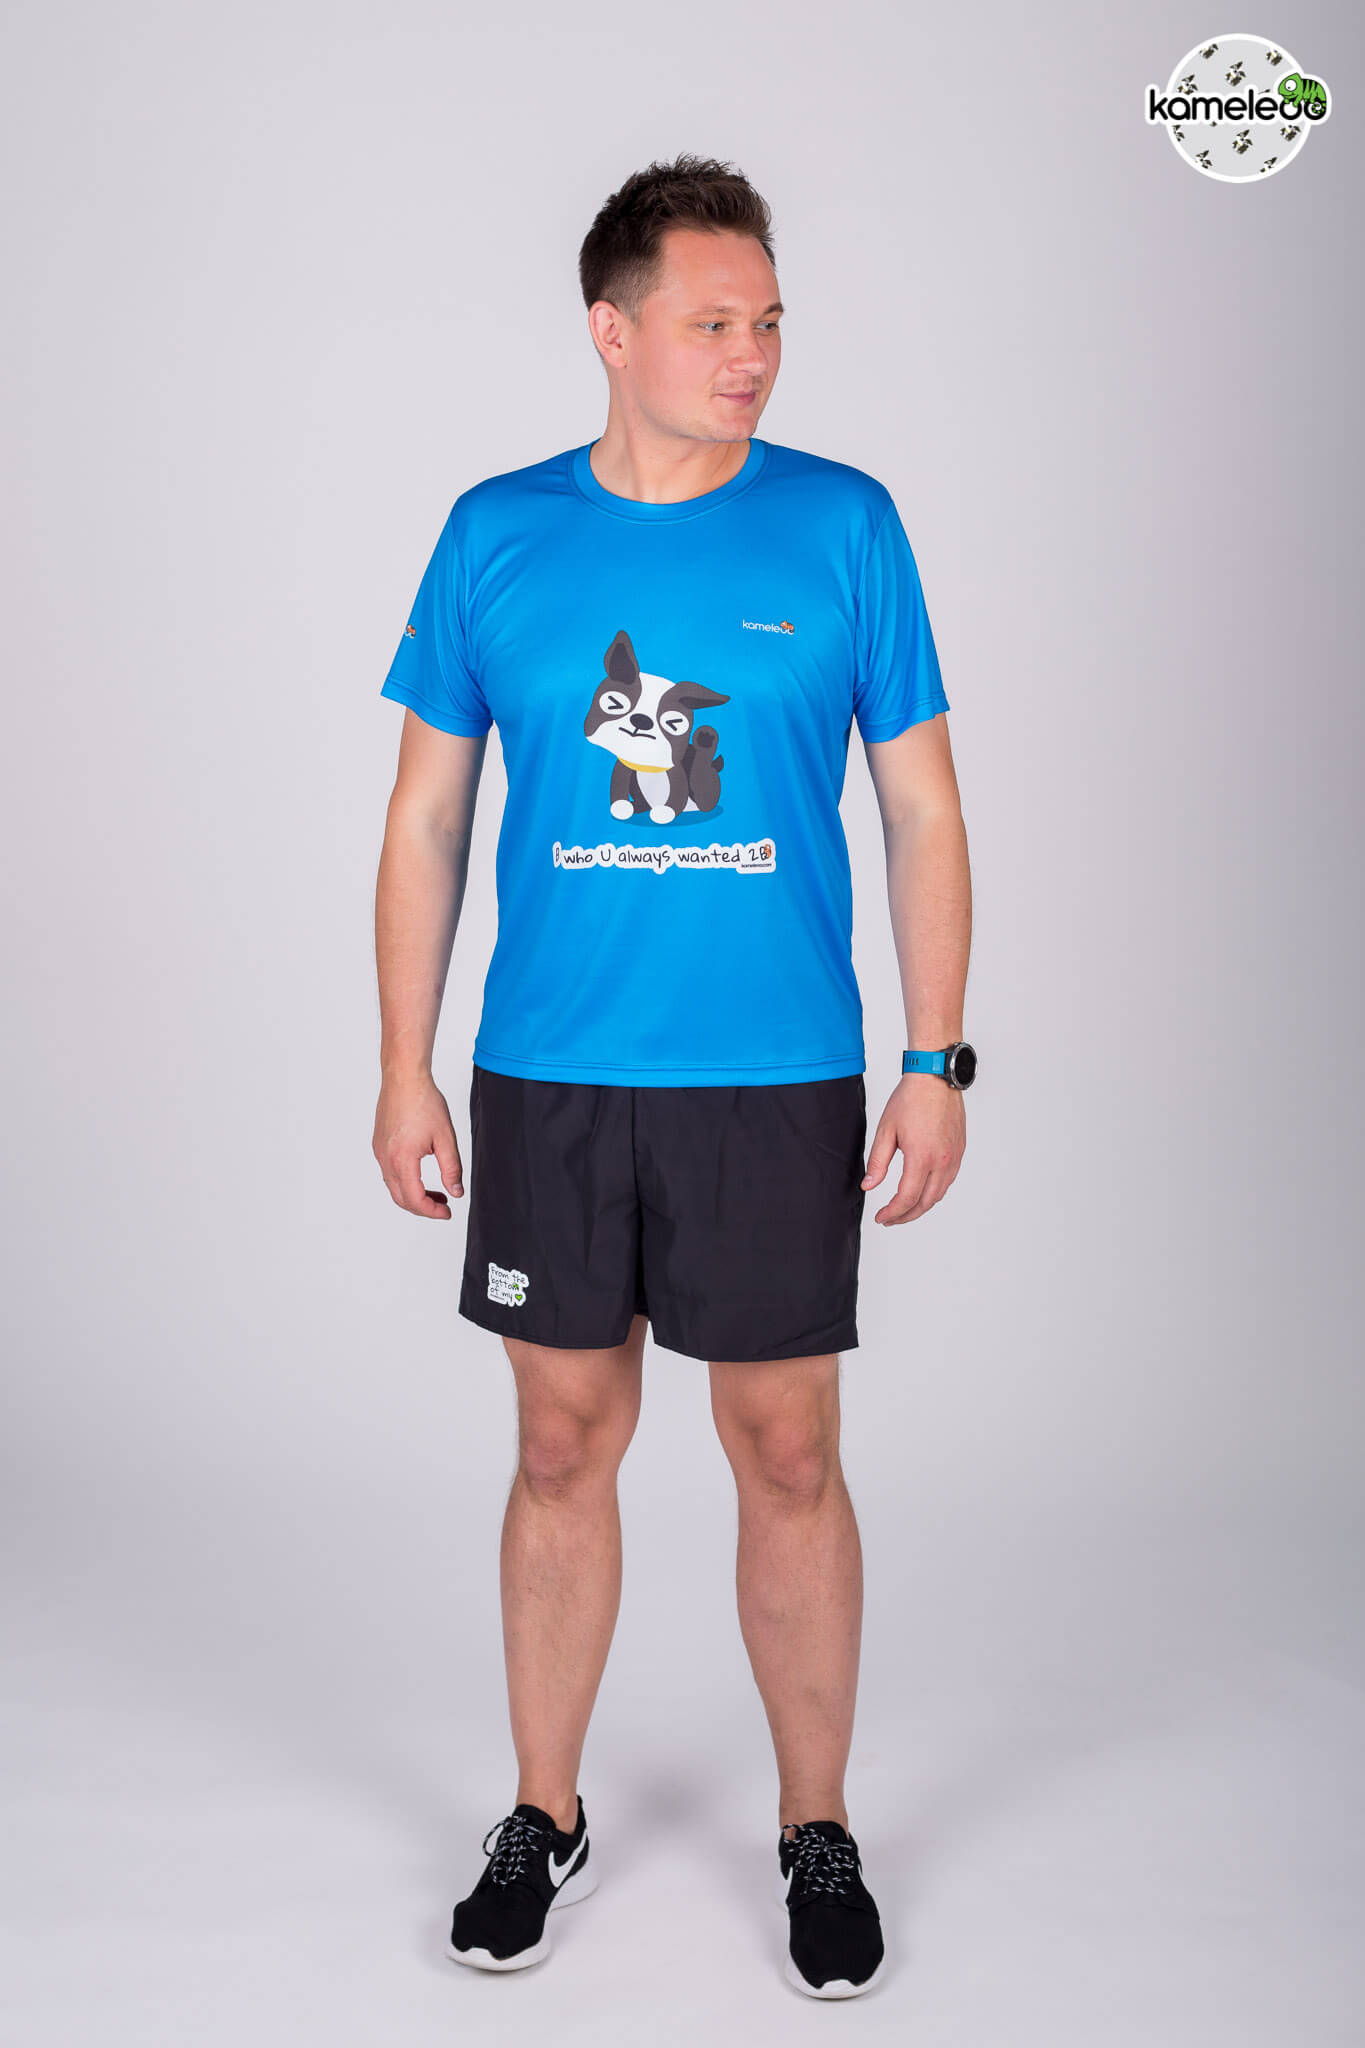 Bostoon training T-shirt - Blue - Kameleoo.com